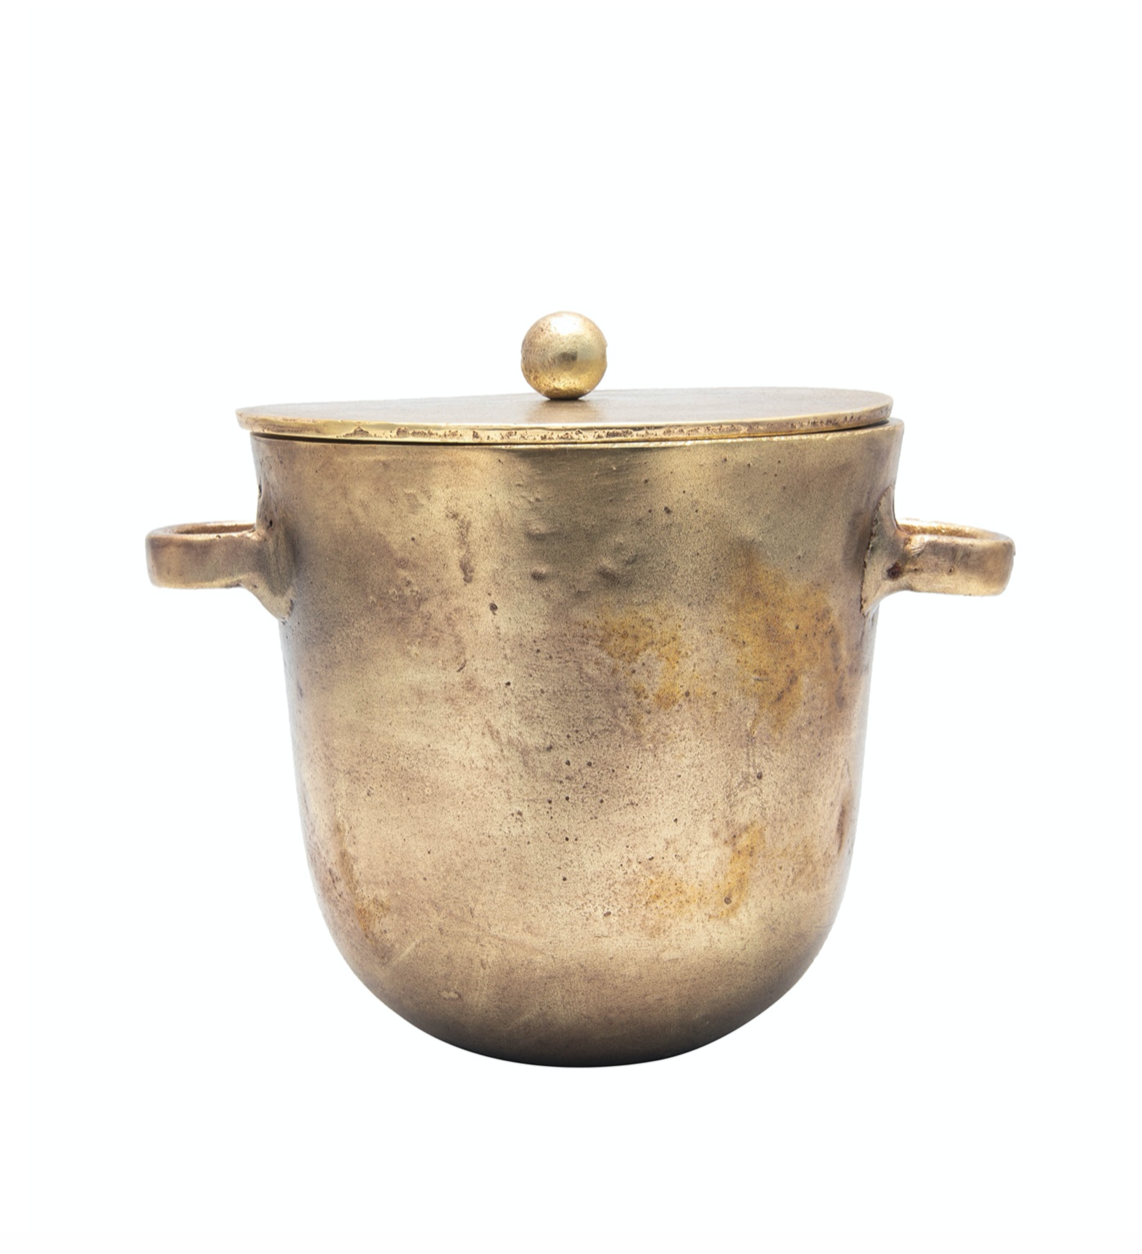 Brass Ice Bucket